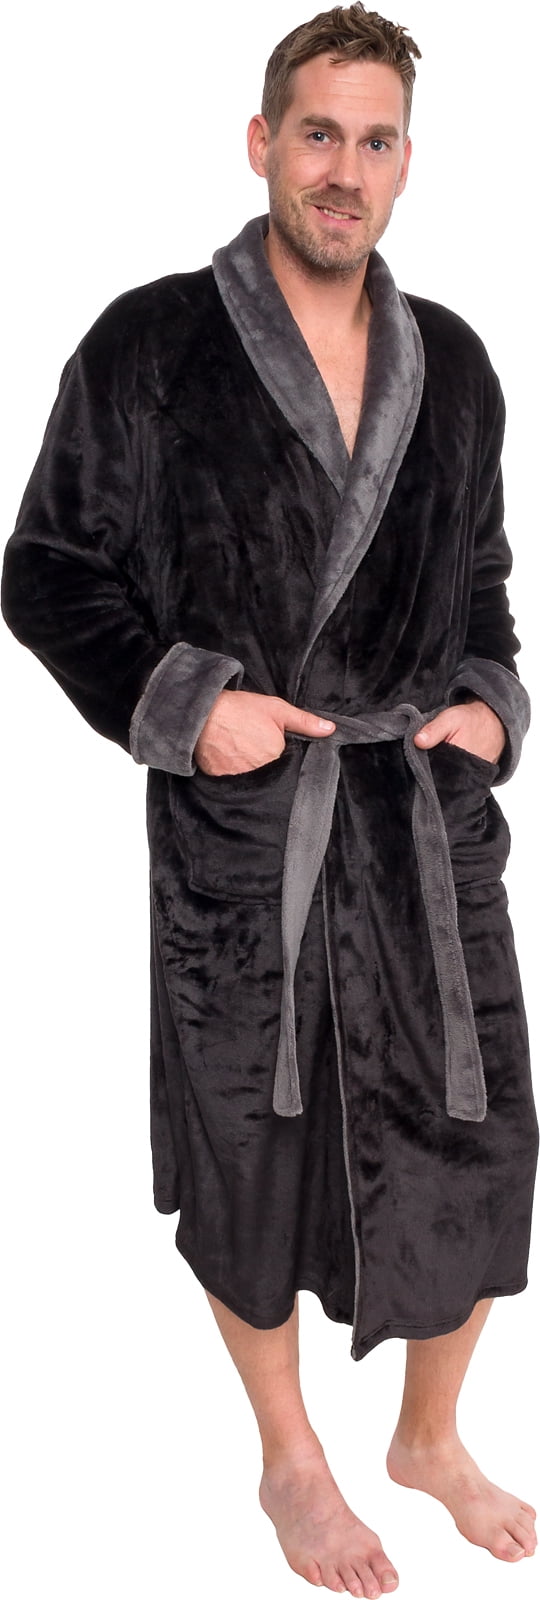 Ross Michaels Men's Robe - Mid Length - Plush Shawl Collar Two Tone Bathrobe (Black & Grey, XXL)